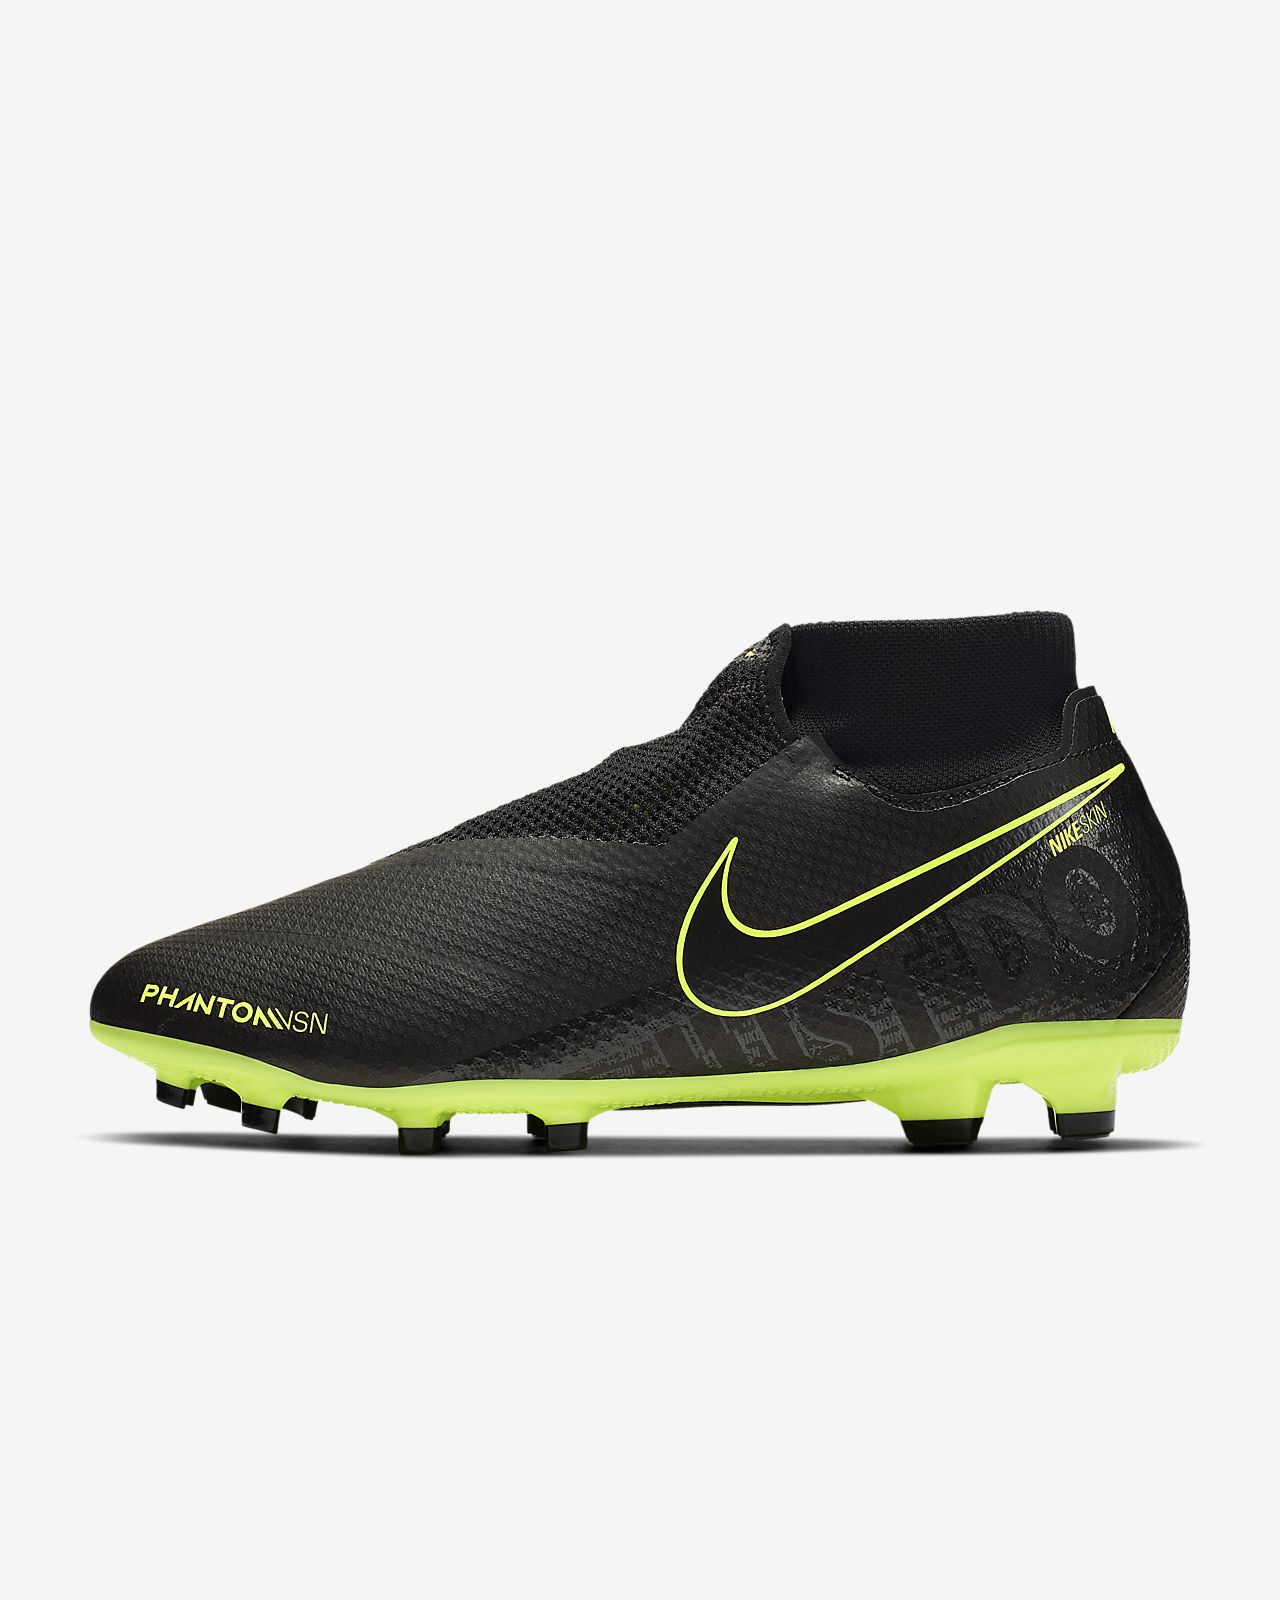 Nike Hypervenom Phantom Elite football boots Football store